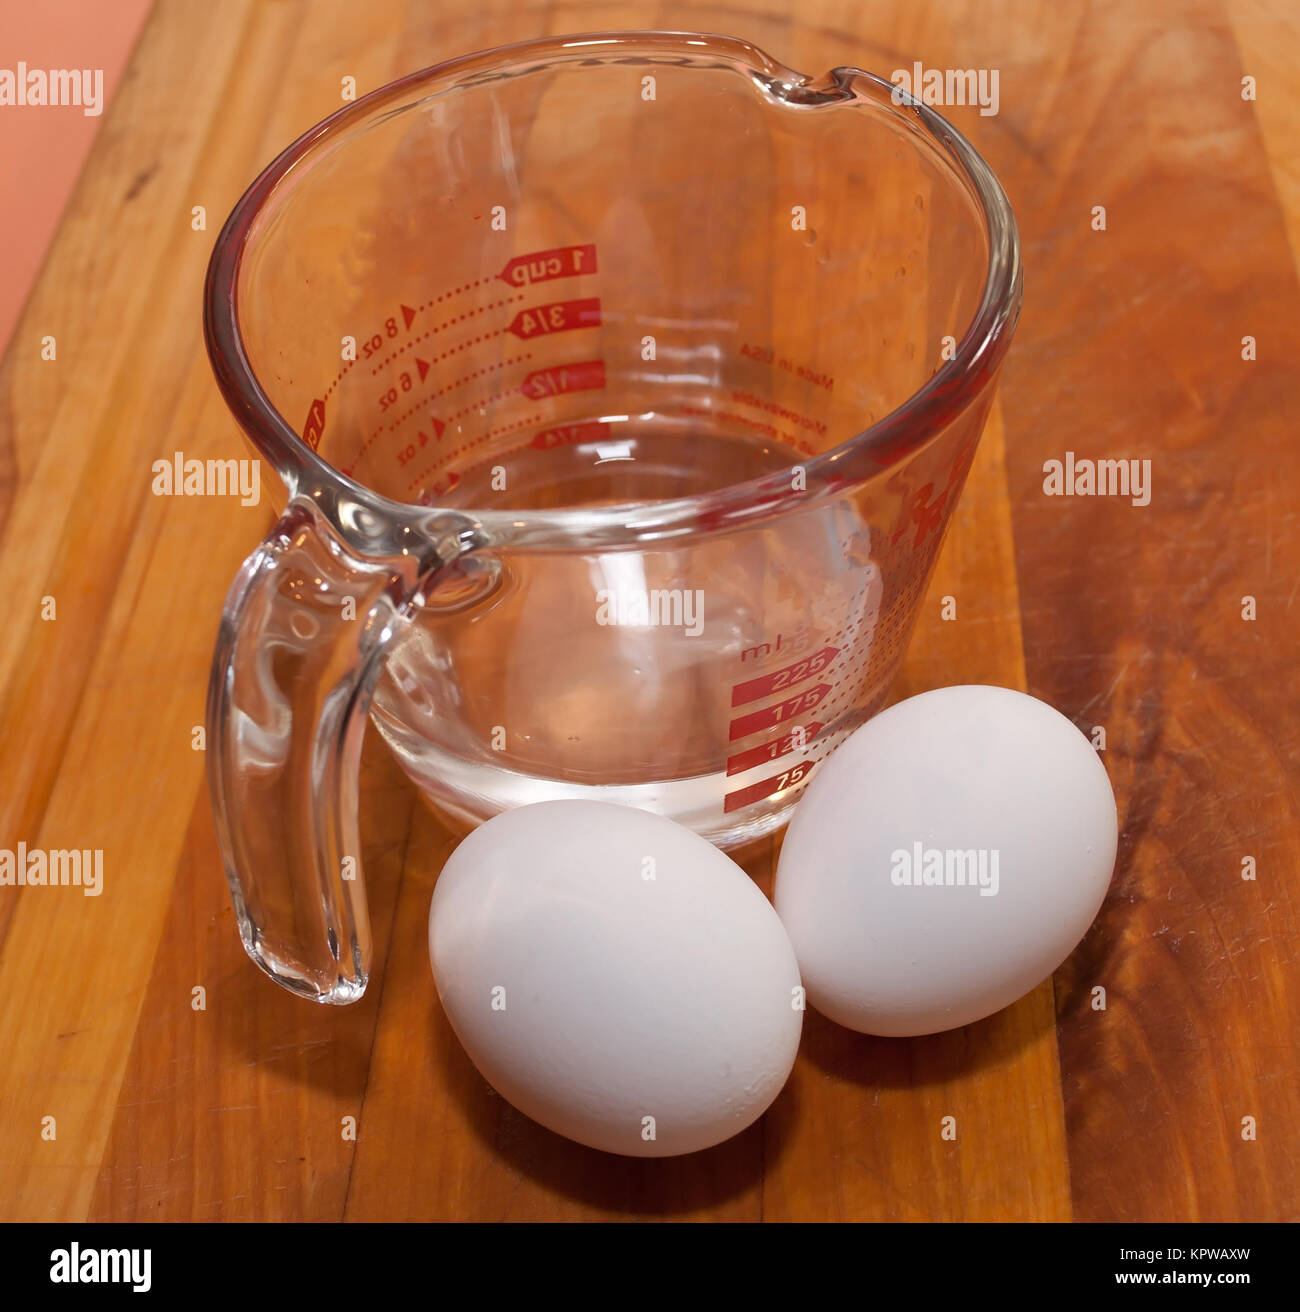 https://c8.alamy.com/comp/KPWAXW/two-eggs-next-to-a-glass-measuring-cup-on-a-wooden-cutting-board-KPWAXW.jpg